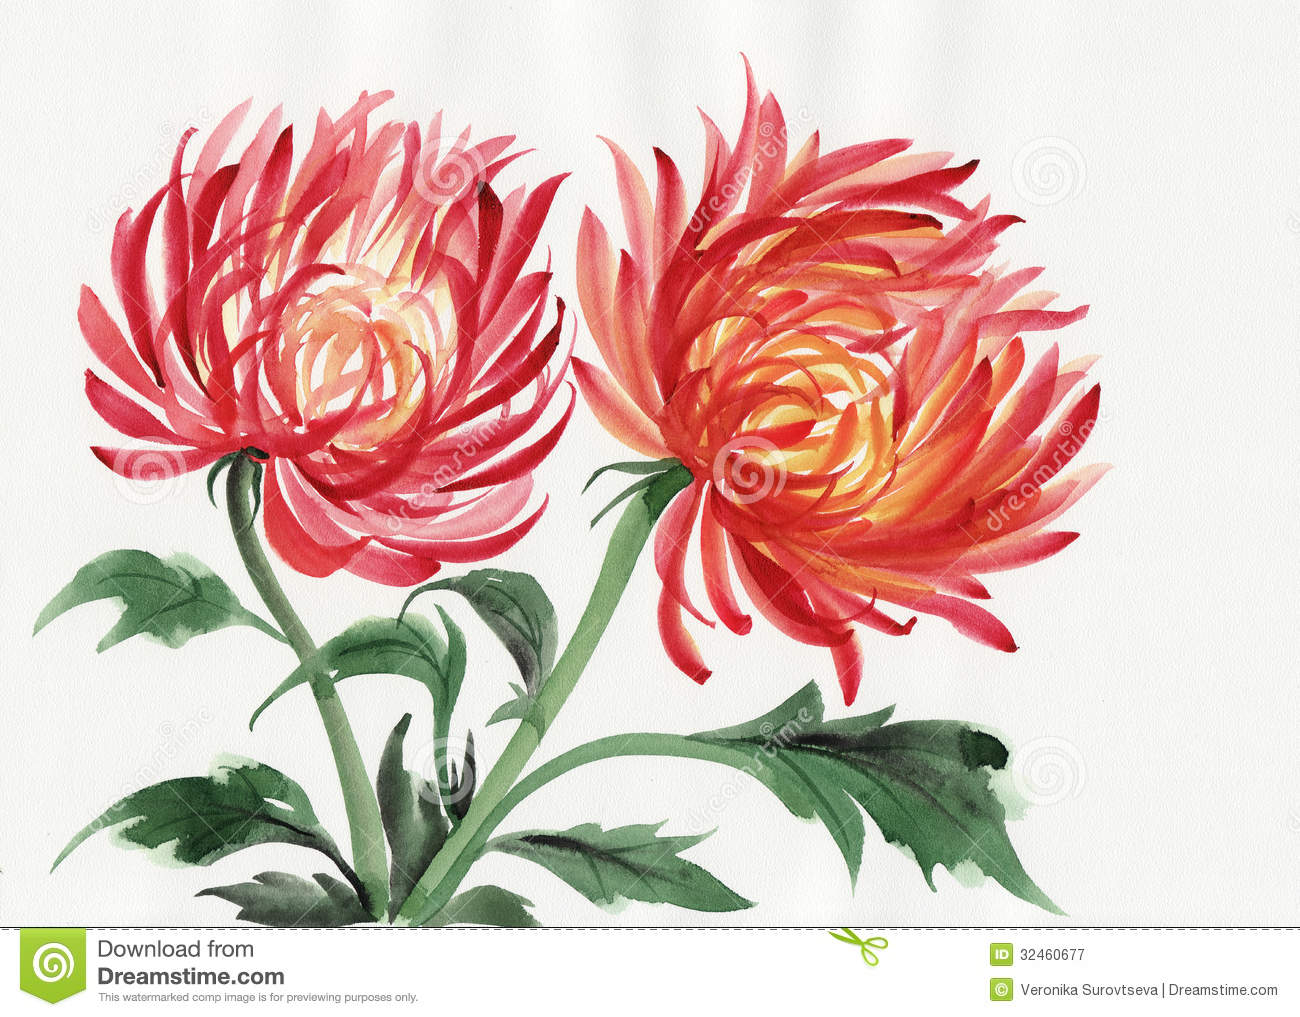 Chrysanthemum Flower Royalty Free Stock Photography   Image  32460677